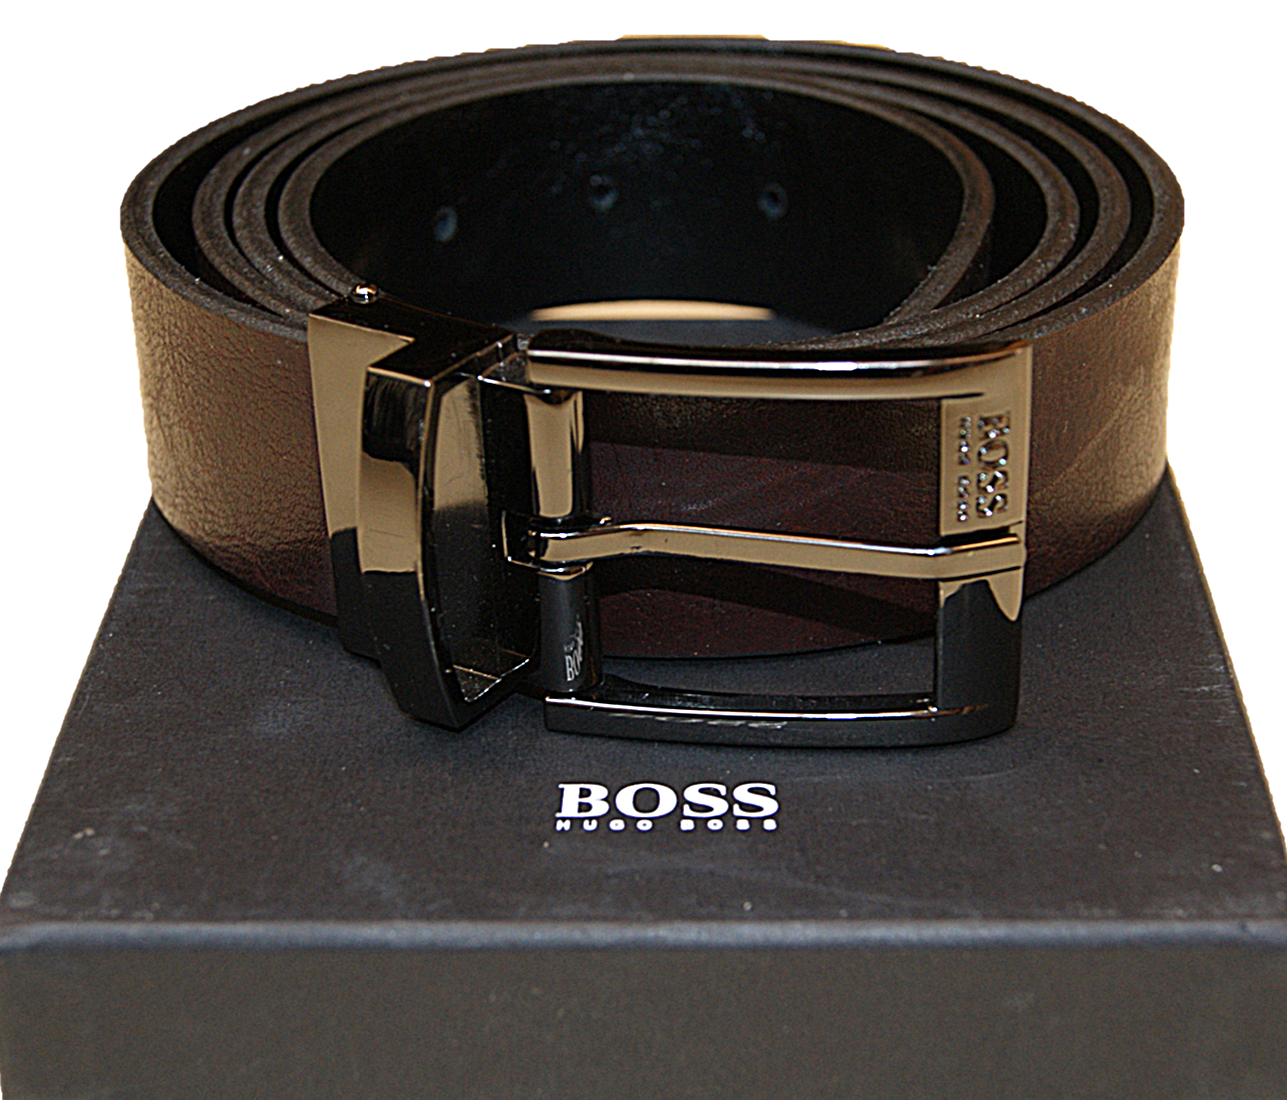 Hugo Boss Gürtel zum selberkürzen OMBIO Farbe schwarz 001-50228928-002